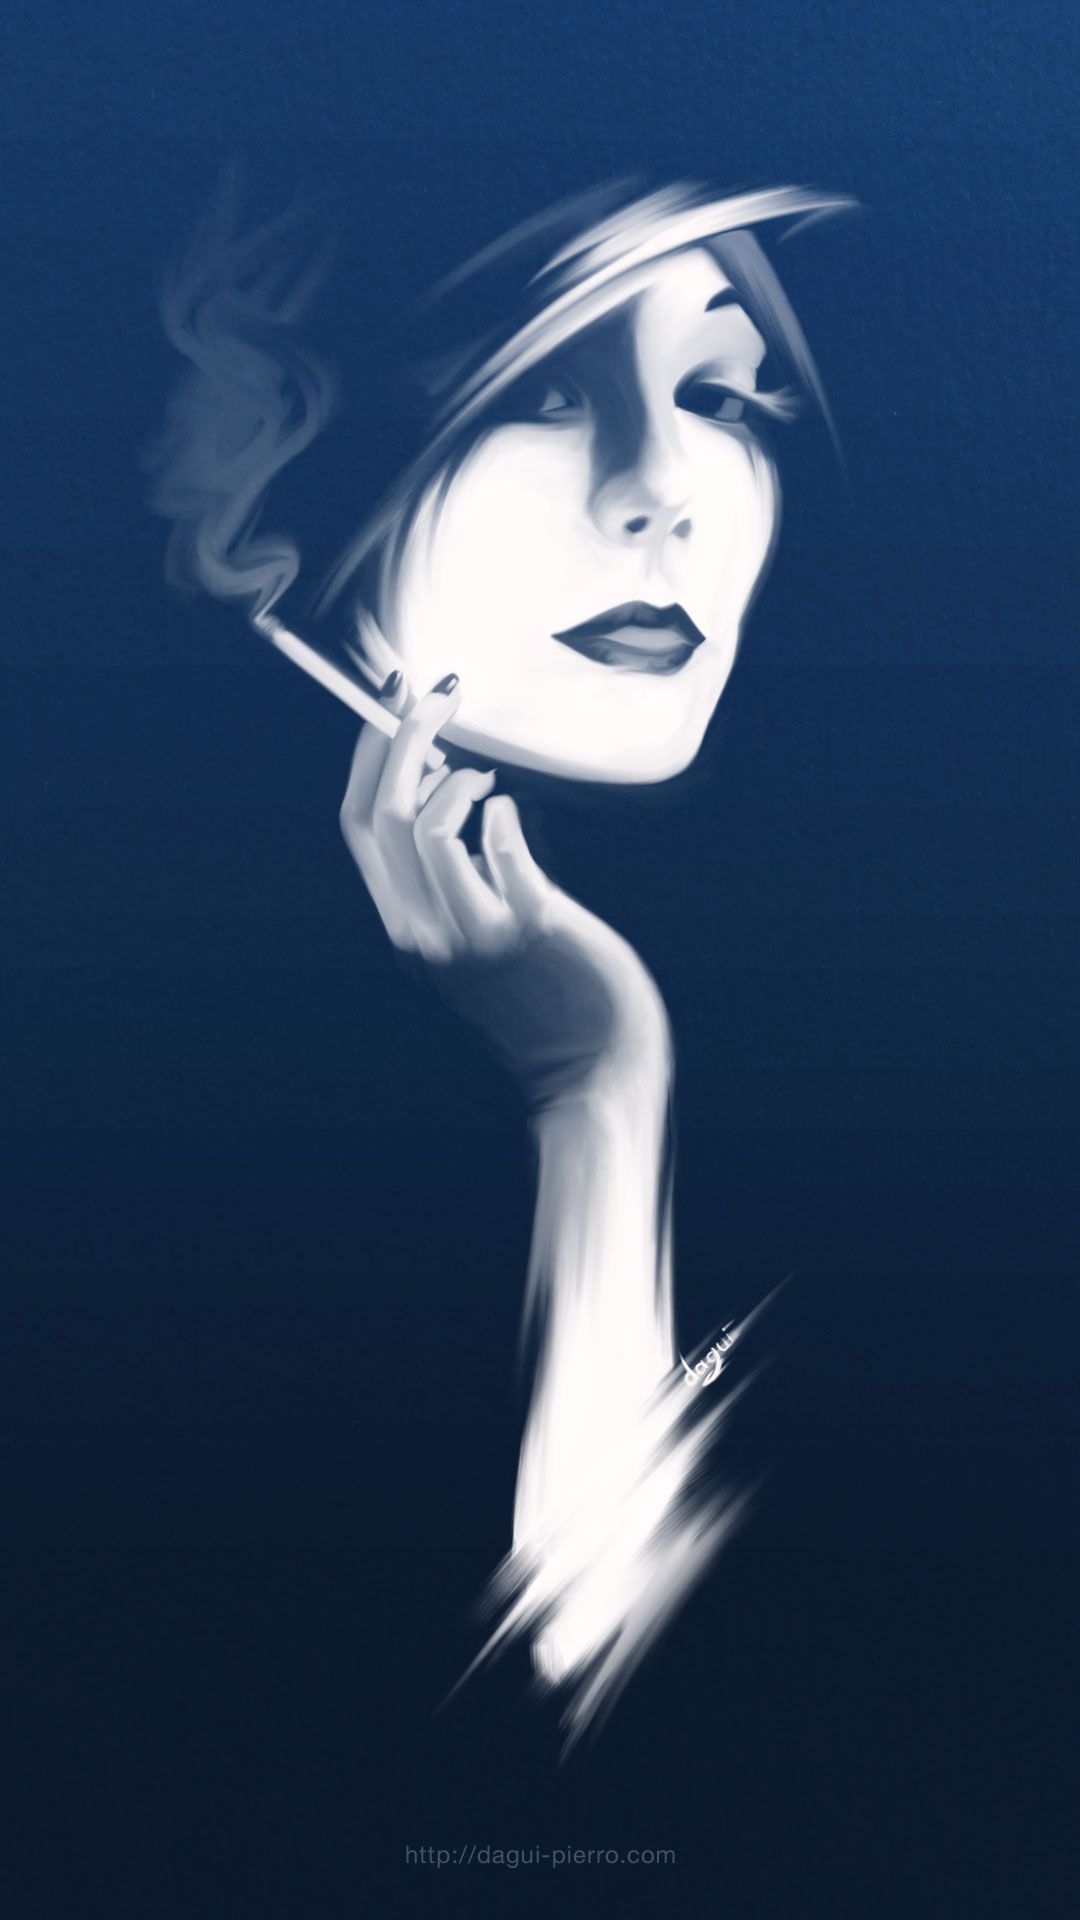 Dagui Pierro • Smoking Hot Woman